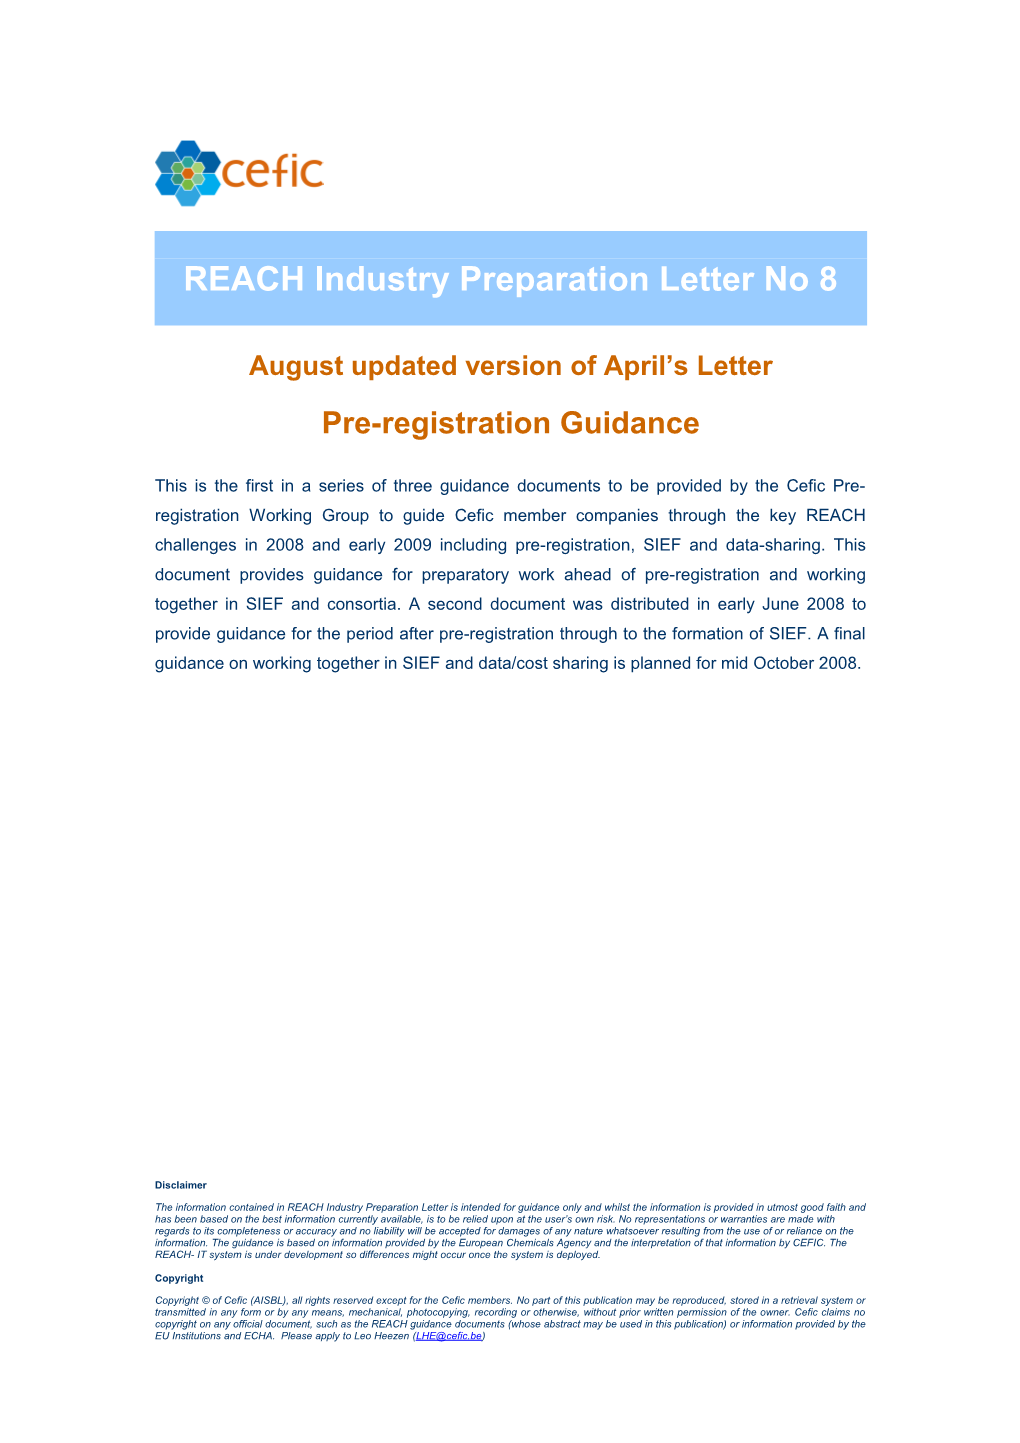 REACH Preparation Letter No. 8